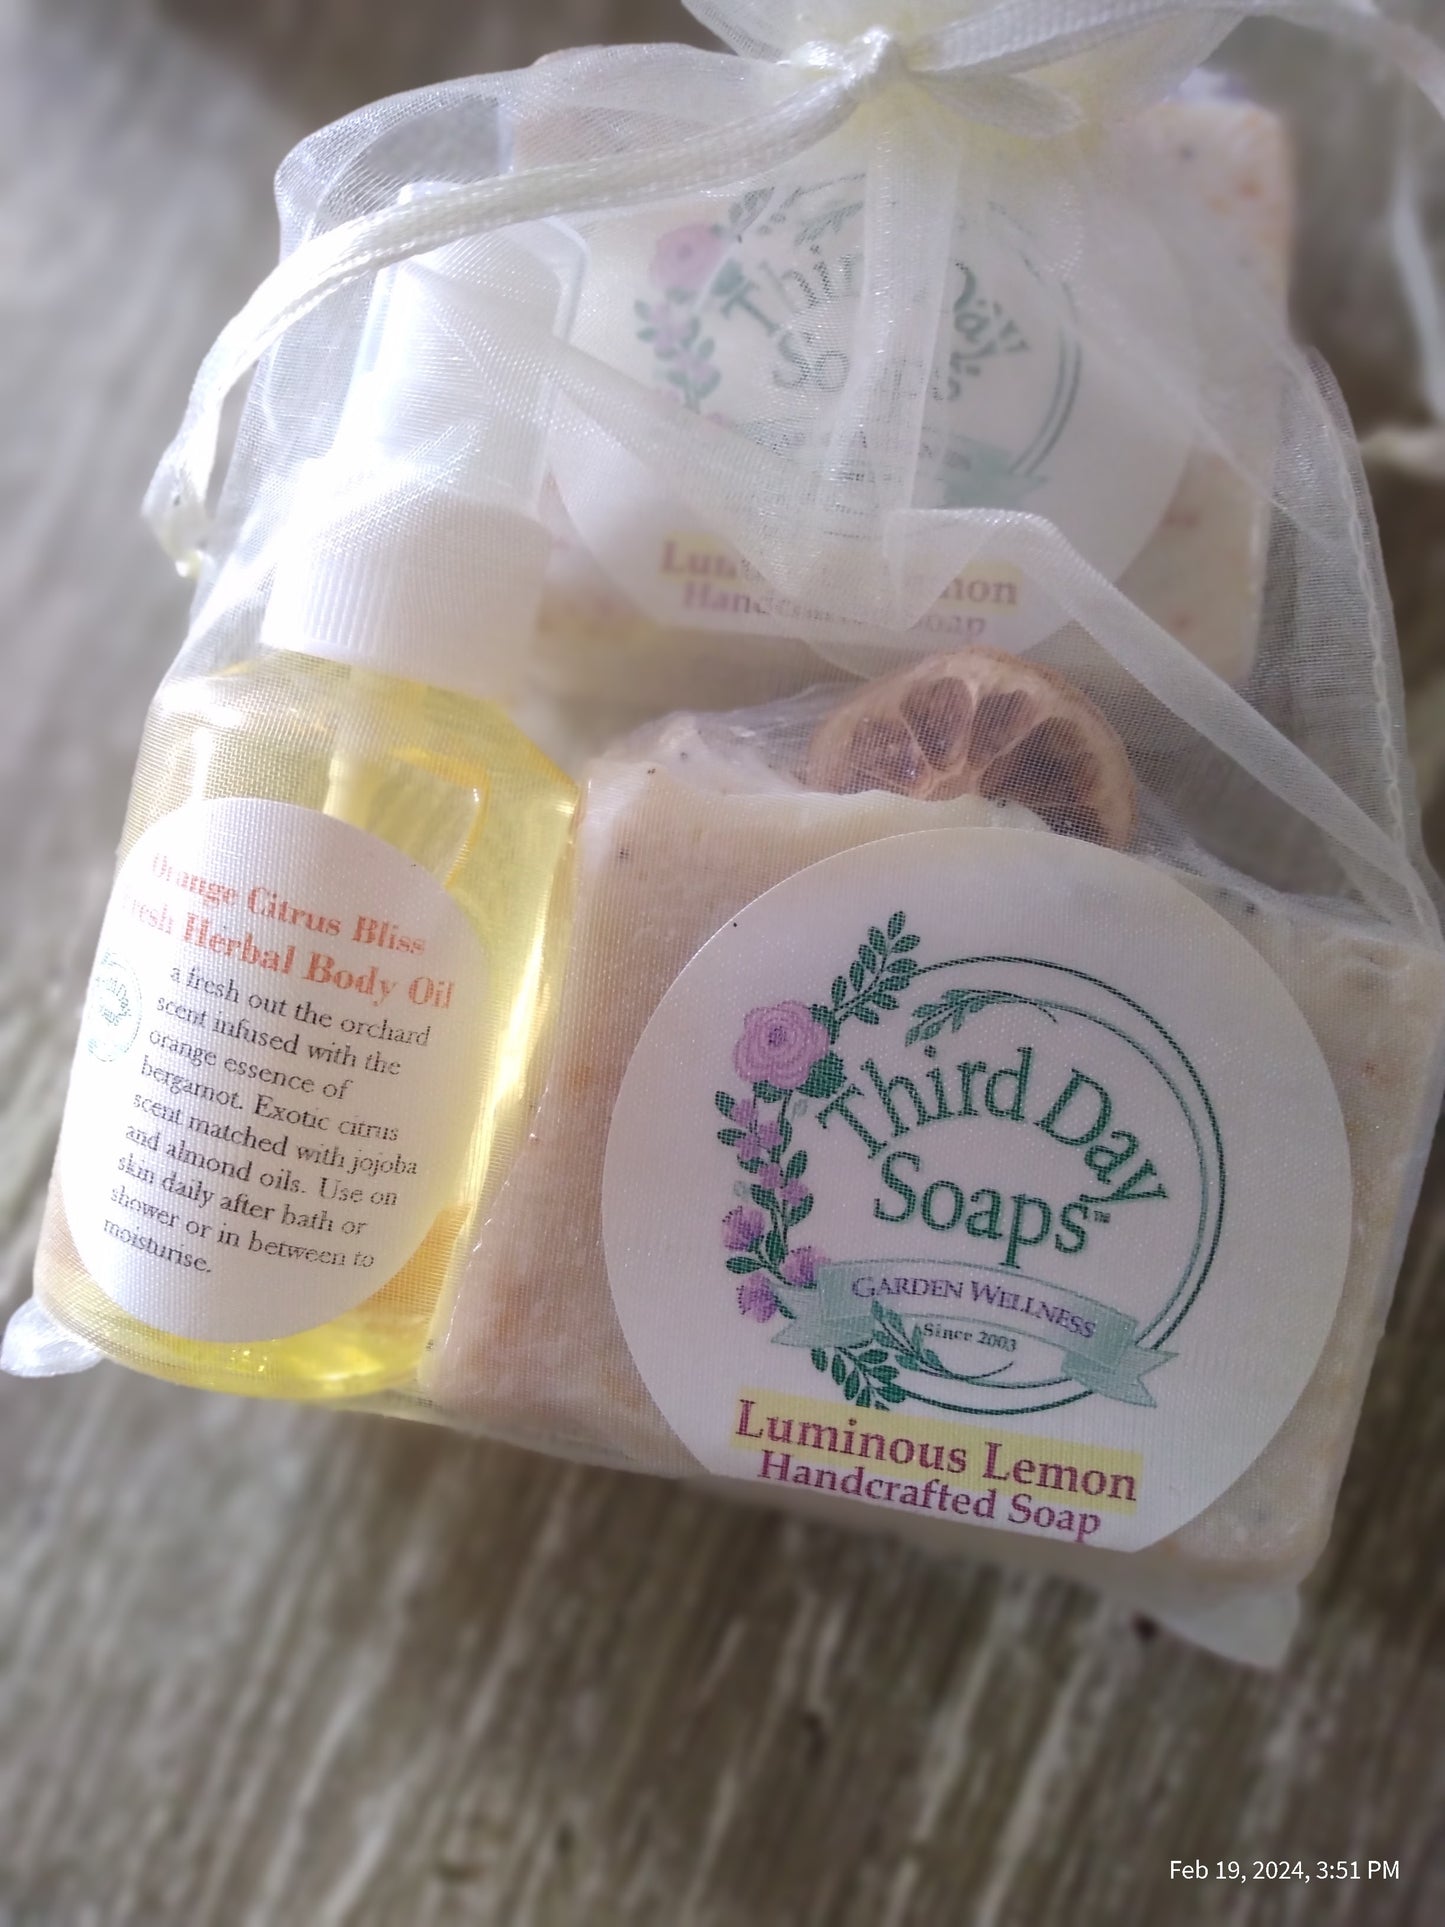 Luminous Lemon handcrafted soap and Citrus body care oil set.